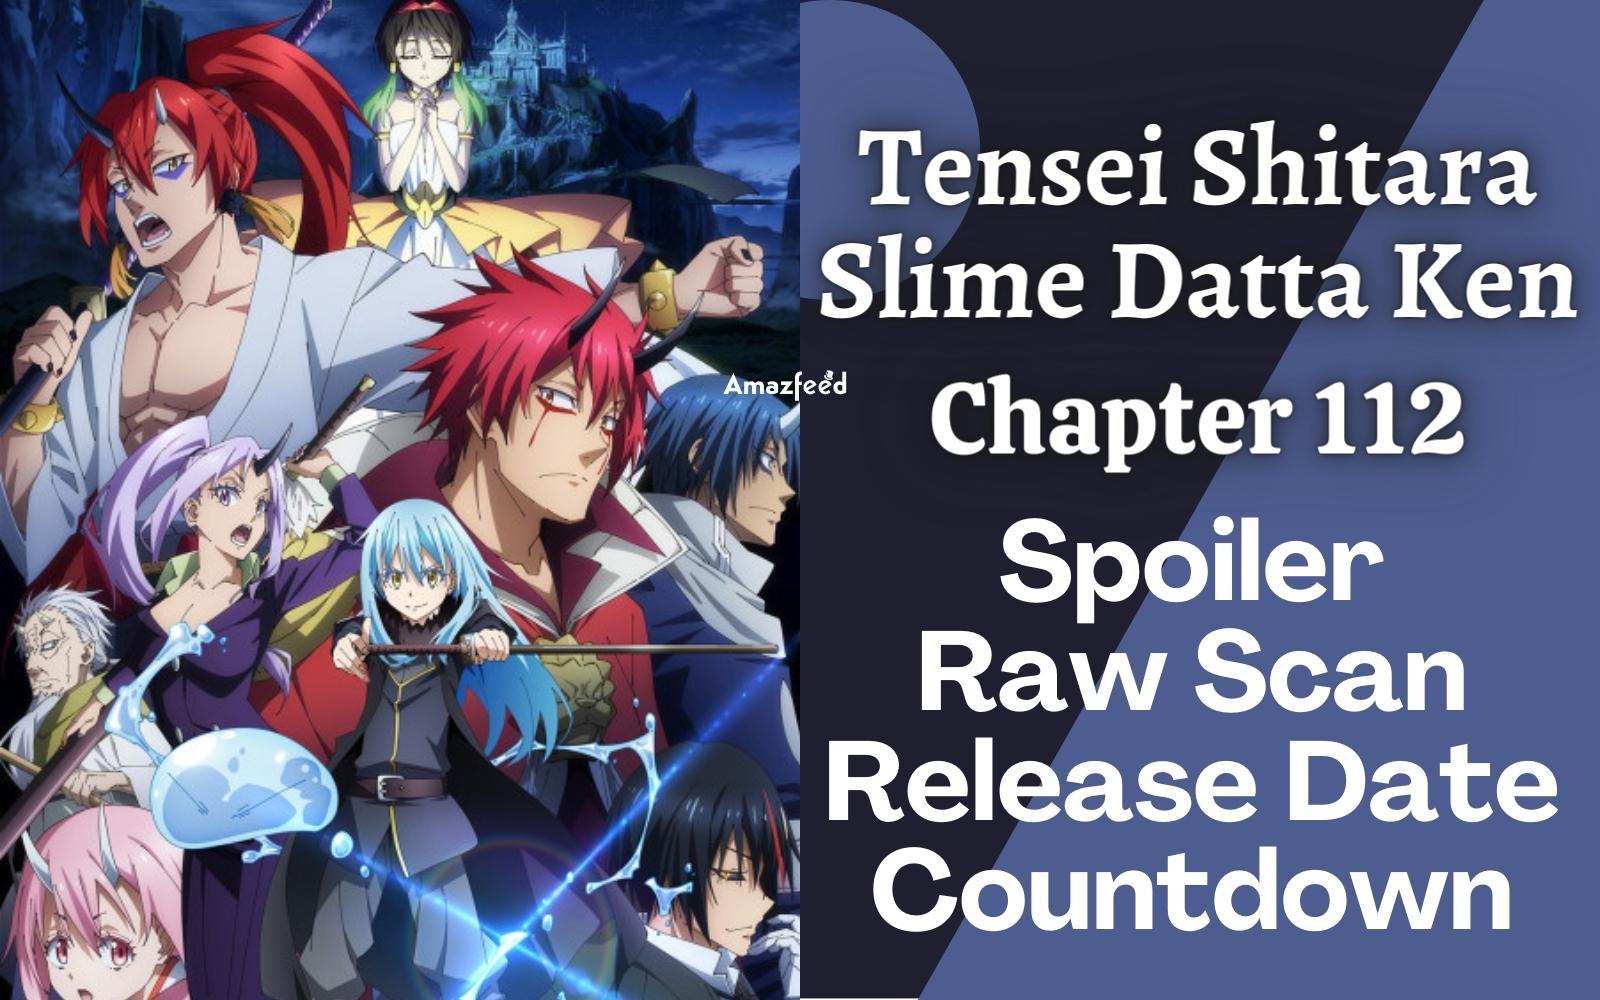 Tensei Shitara Slime Datta Ken - Manga Chapter 112 #tensura #manga